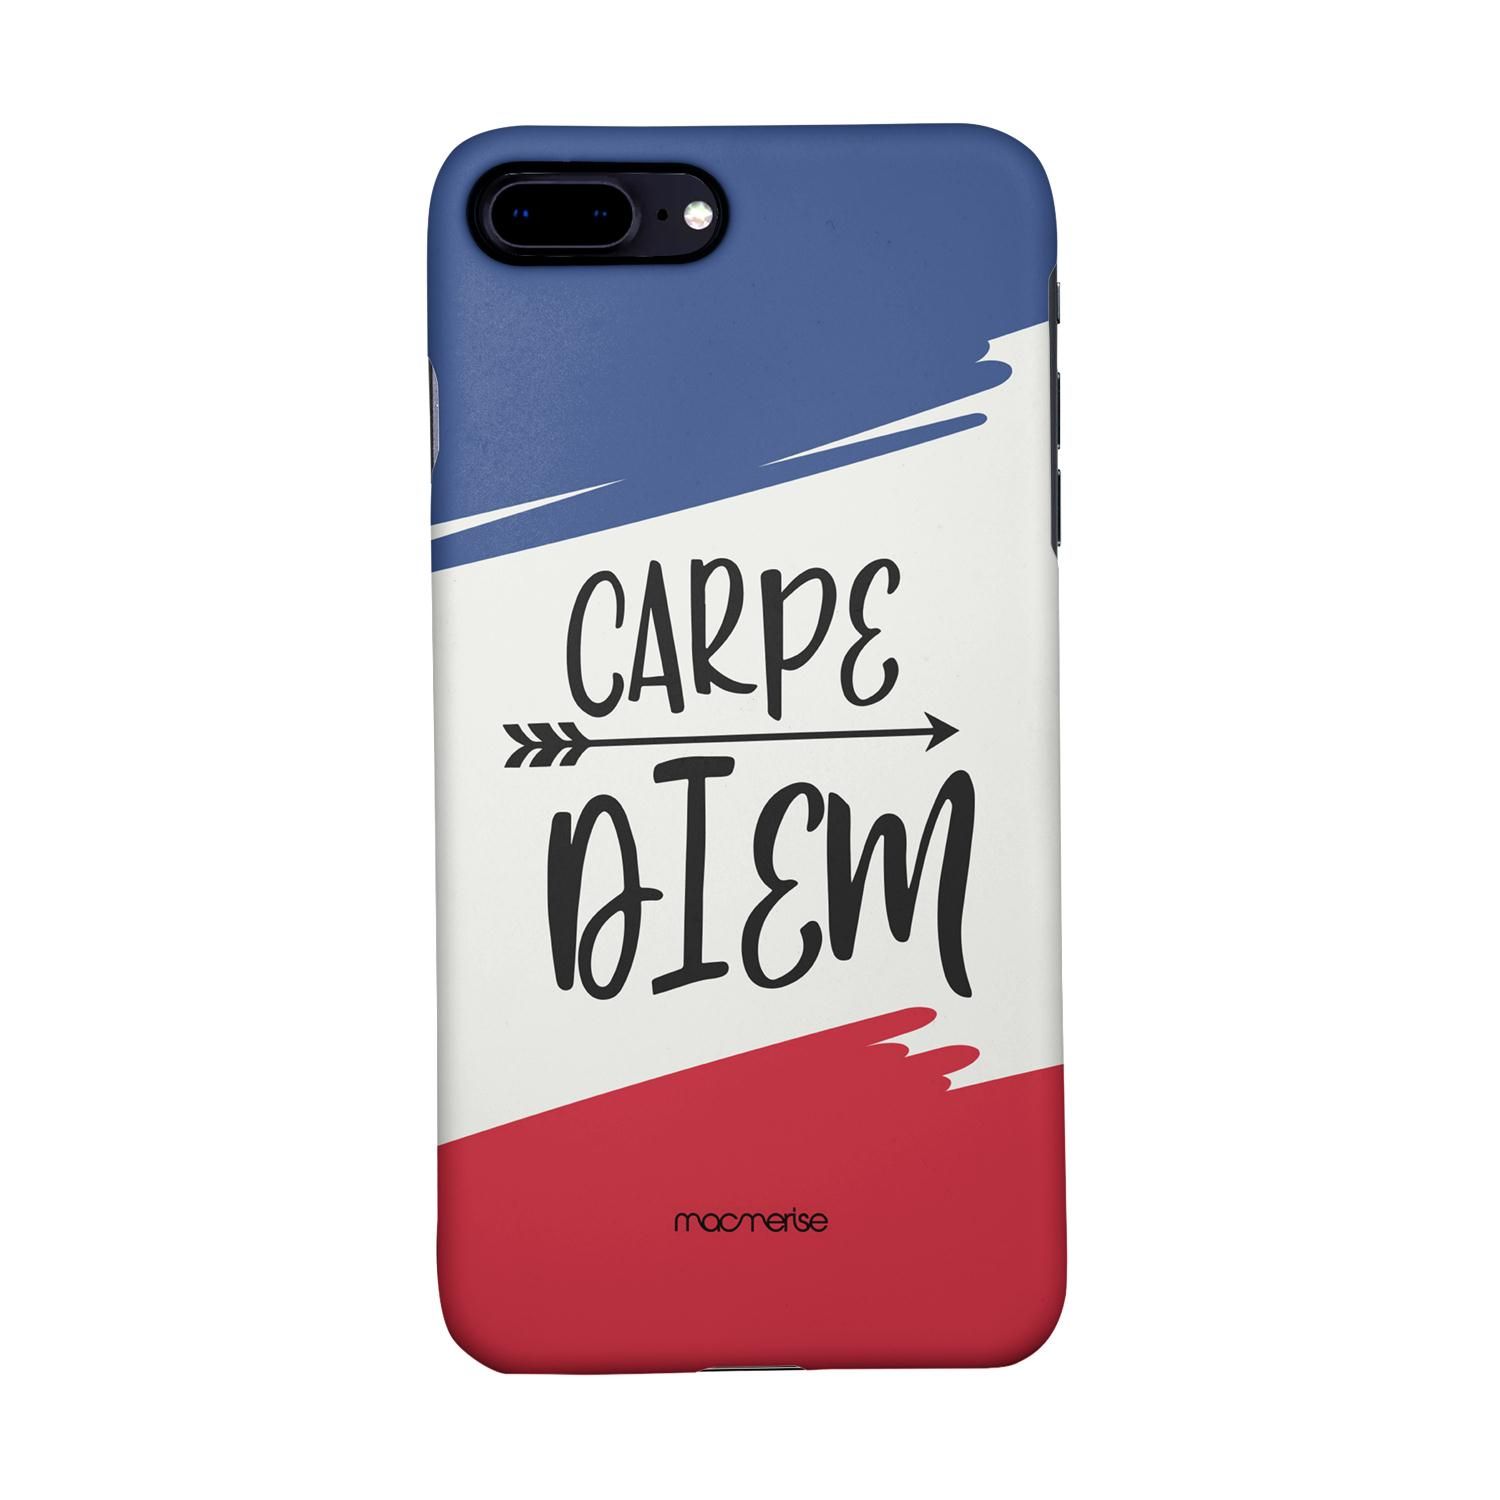 Carpe Diem - Sleek Case for iPhone 8 Plus